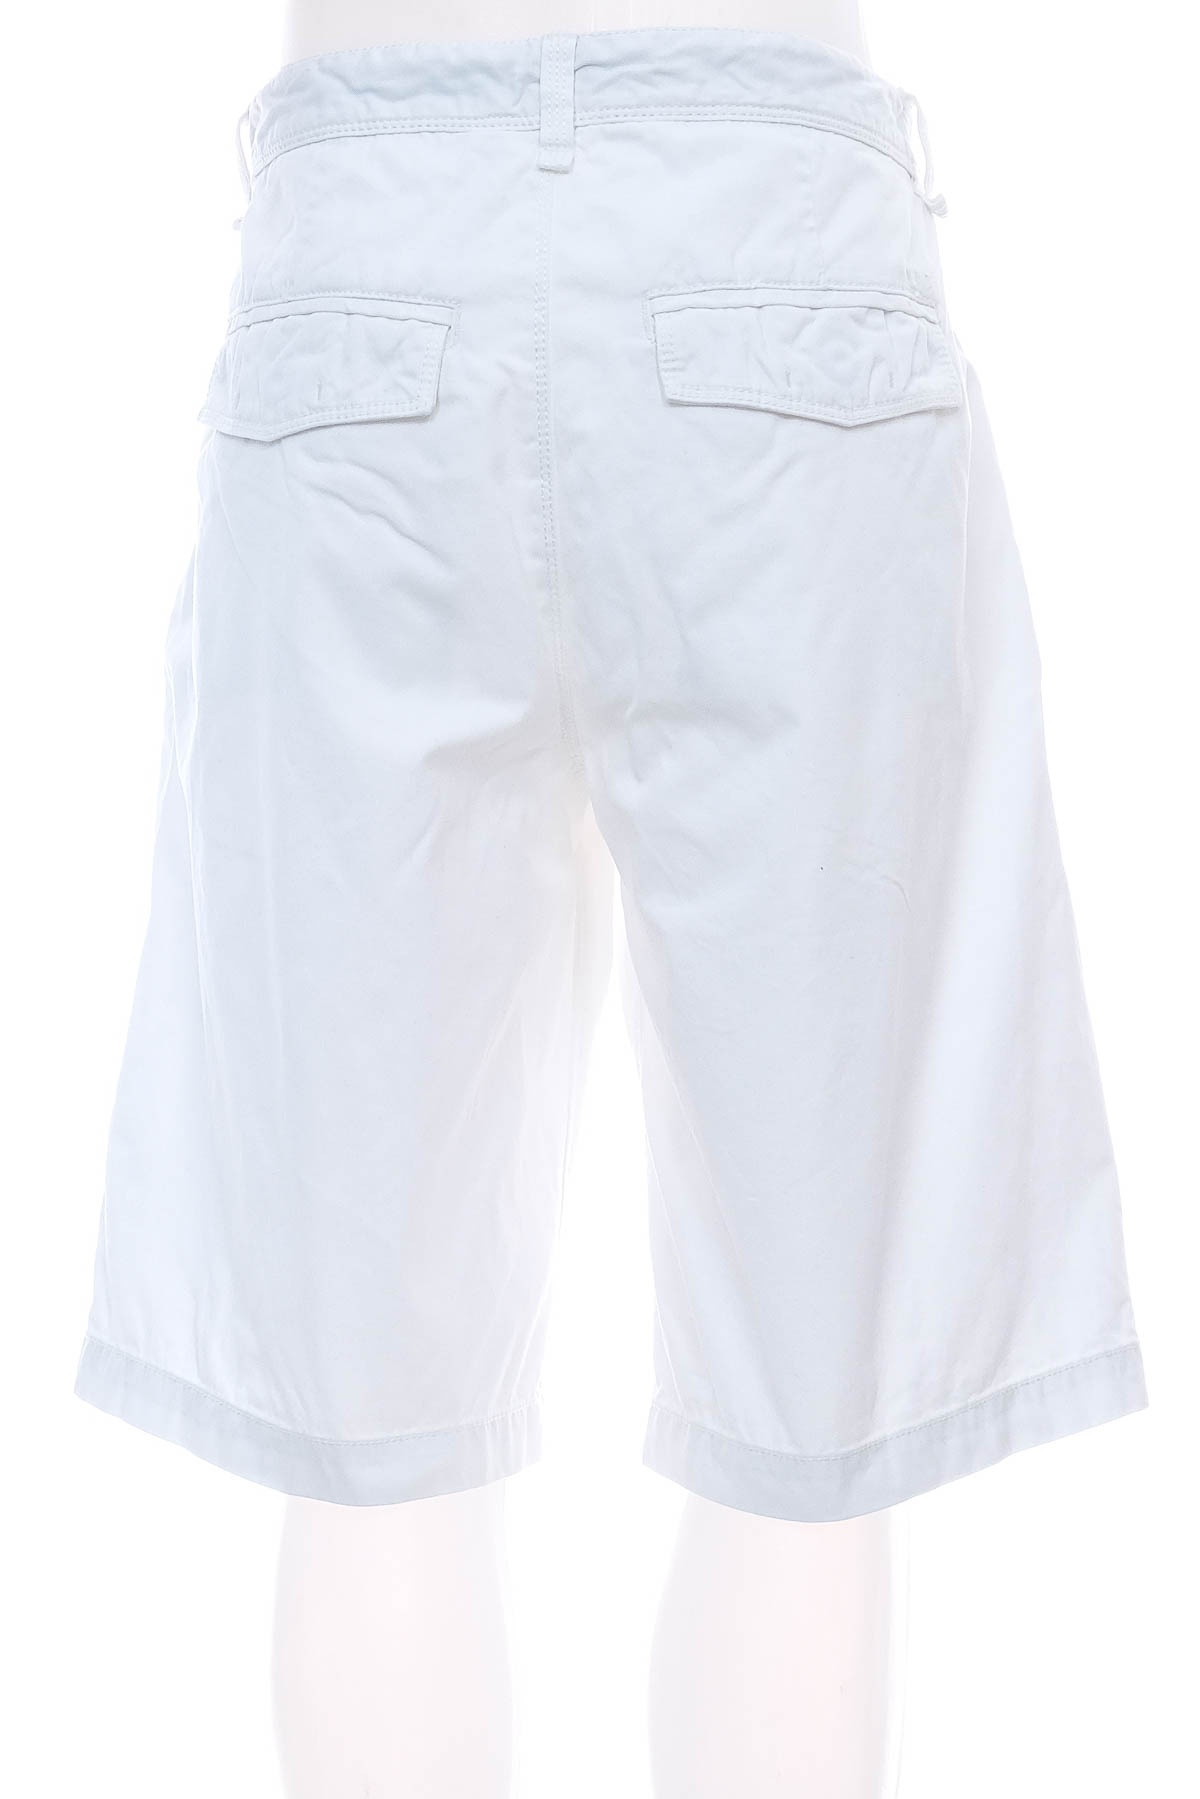 Men's shorts - MAC - 1